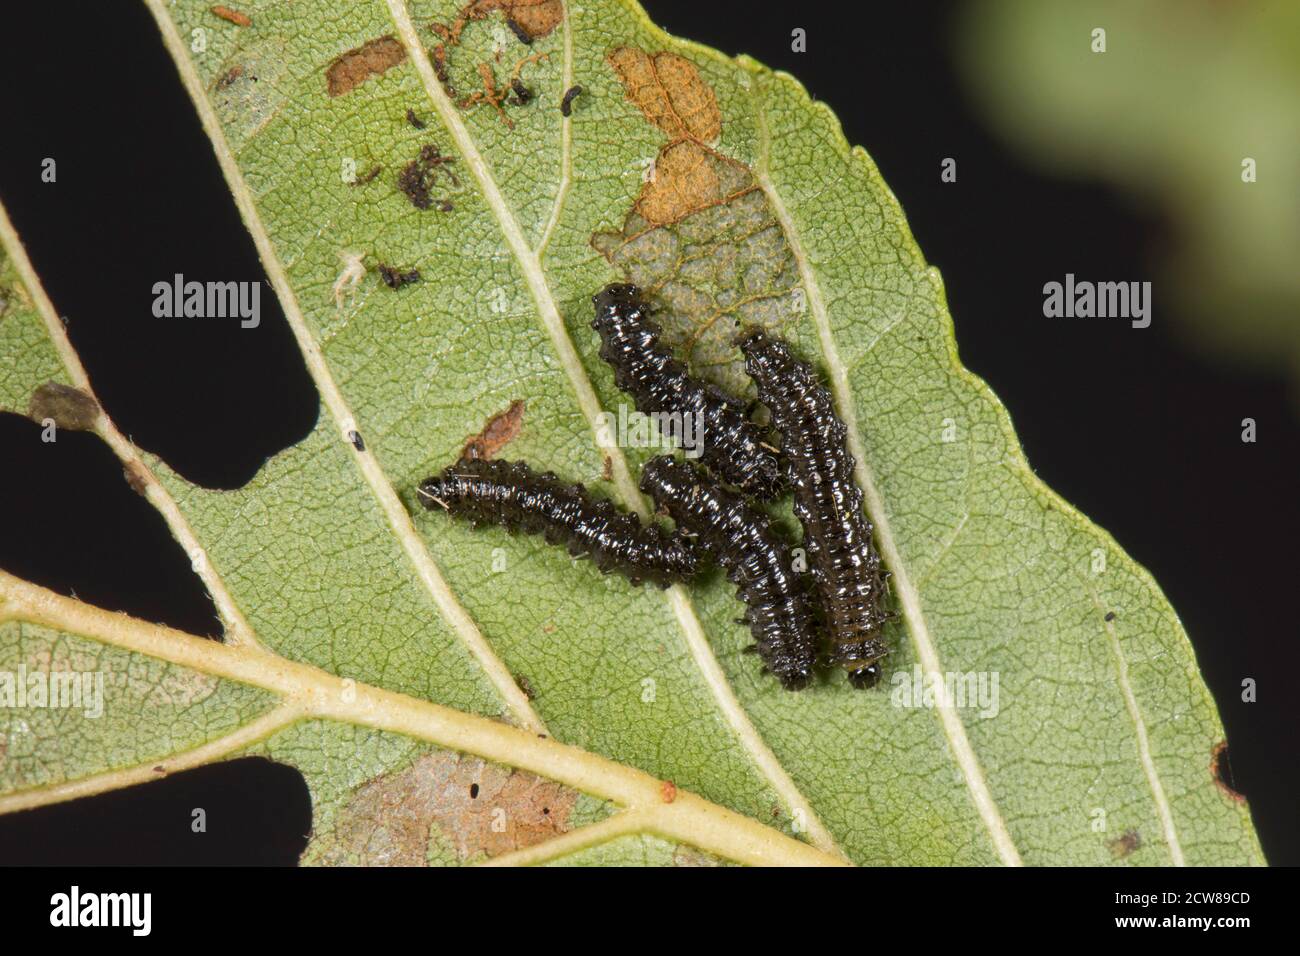 Alder leaf beetle (Agelastica alni) black larvae and severe leaf damage to alder (Alnus glutinosa) tree, Berkshire, July Stock Photo